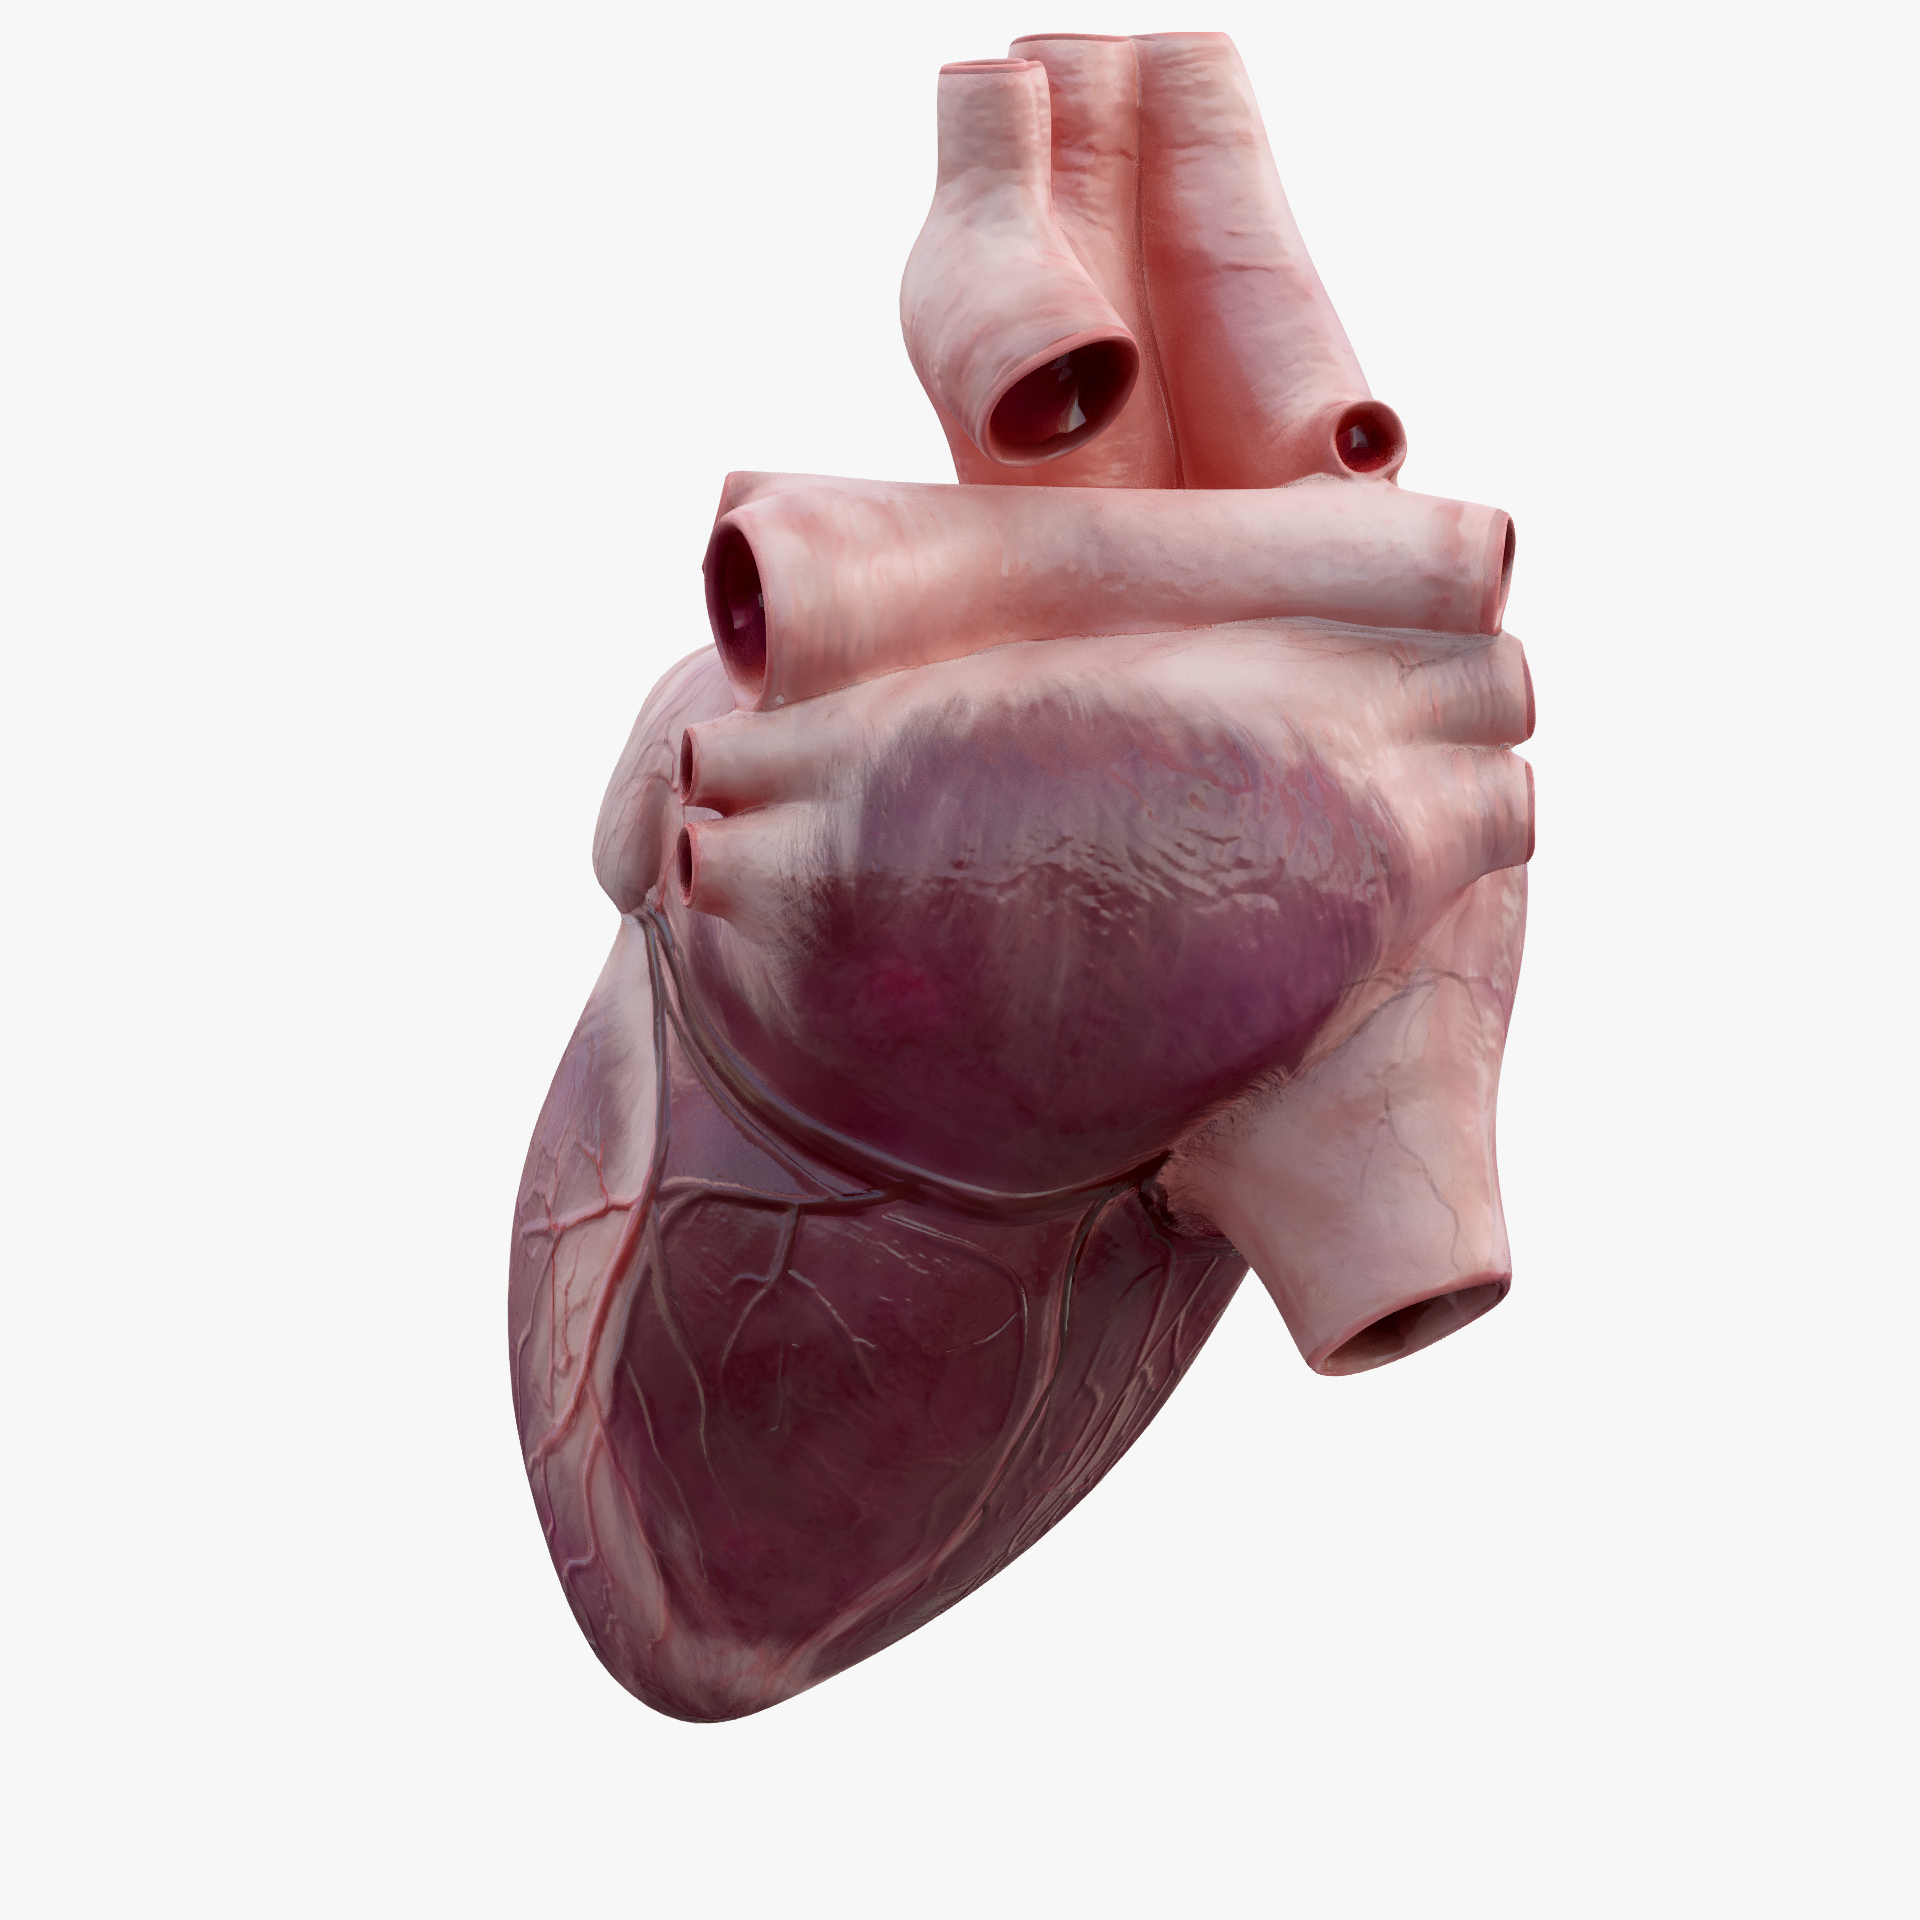 Human heart animation 3D model - TurboSquid 1298711